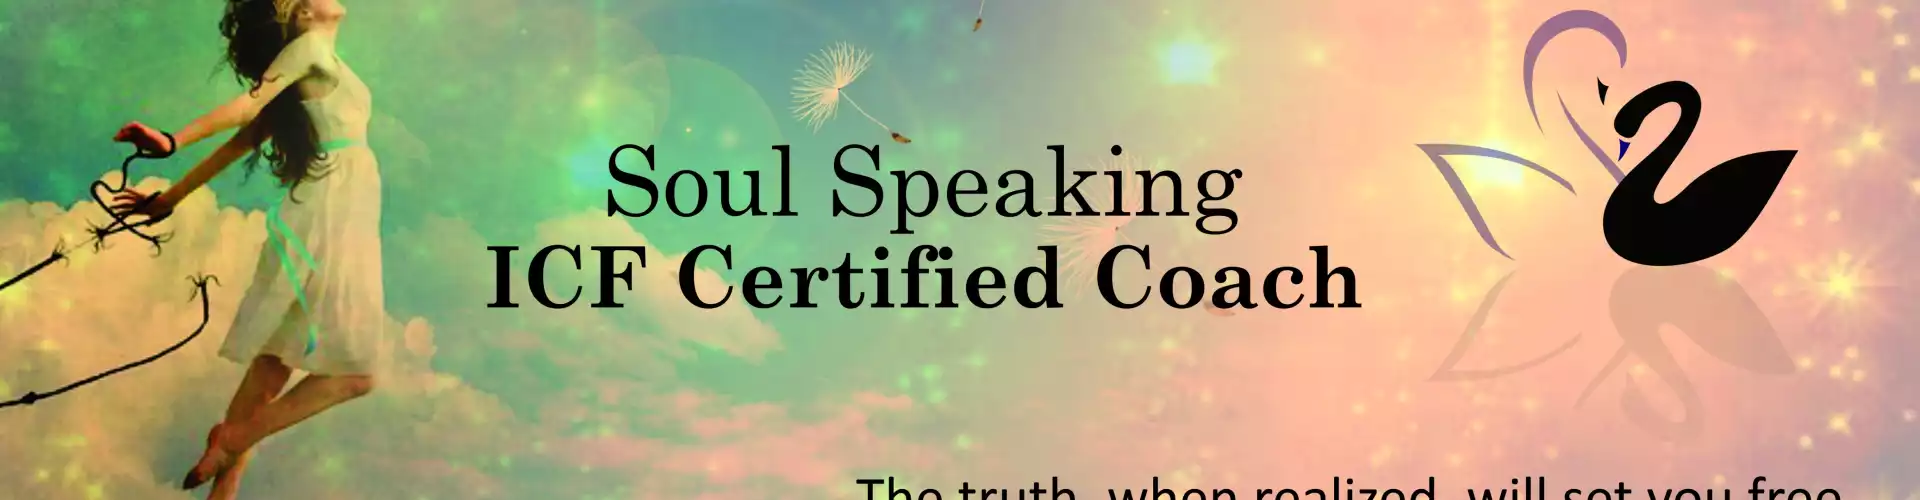 Soul Speaking ICF Certified Coach